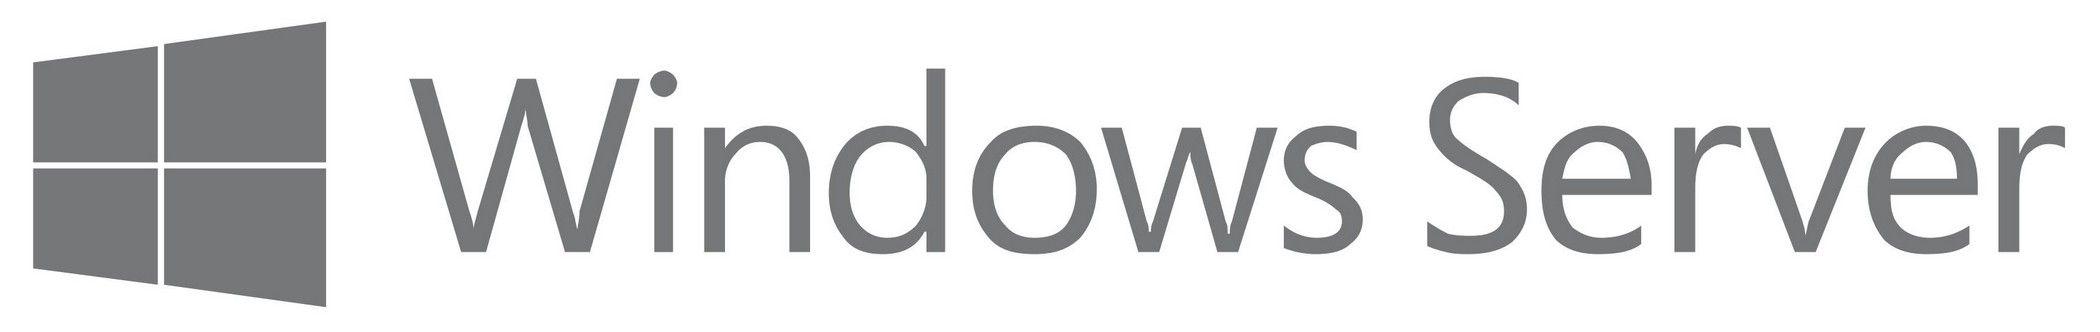 Windows Server Logo - Windows Server Logo Free Vector Download